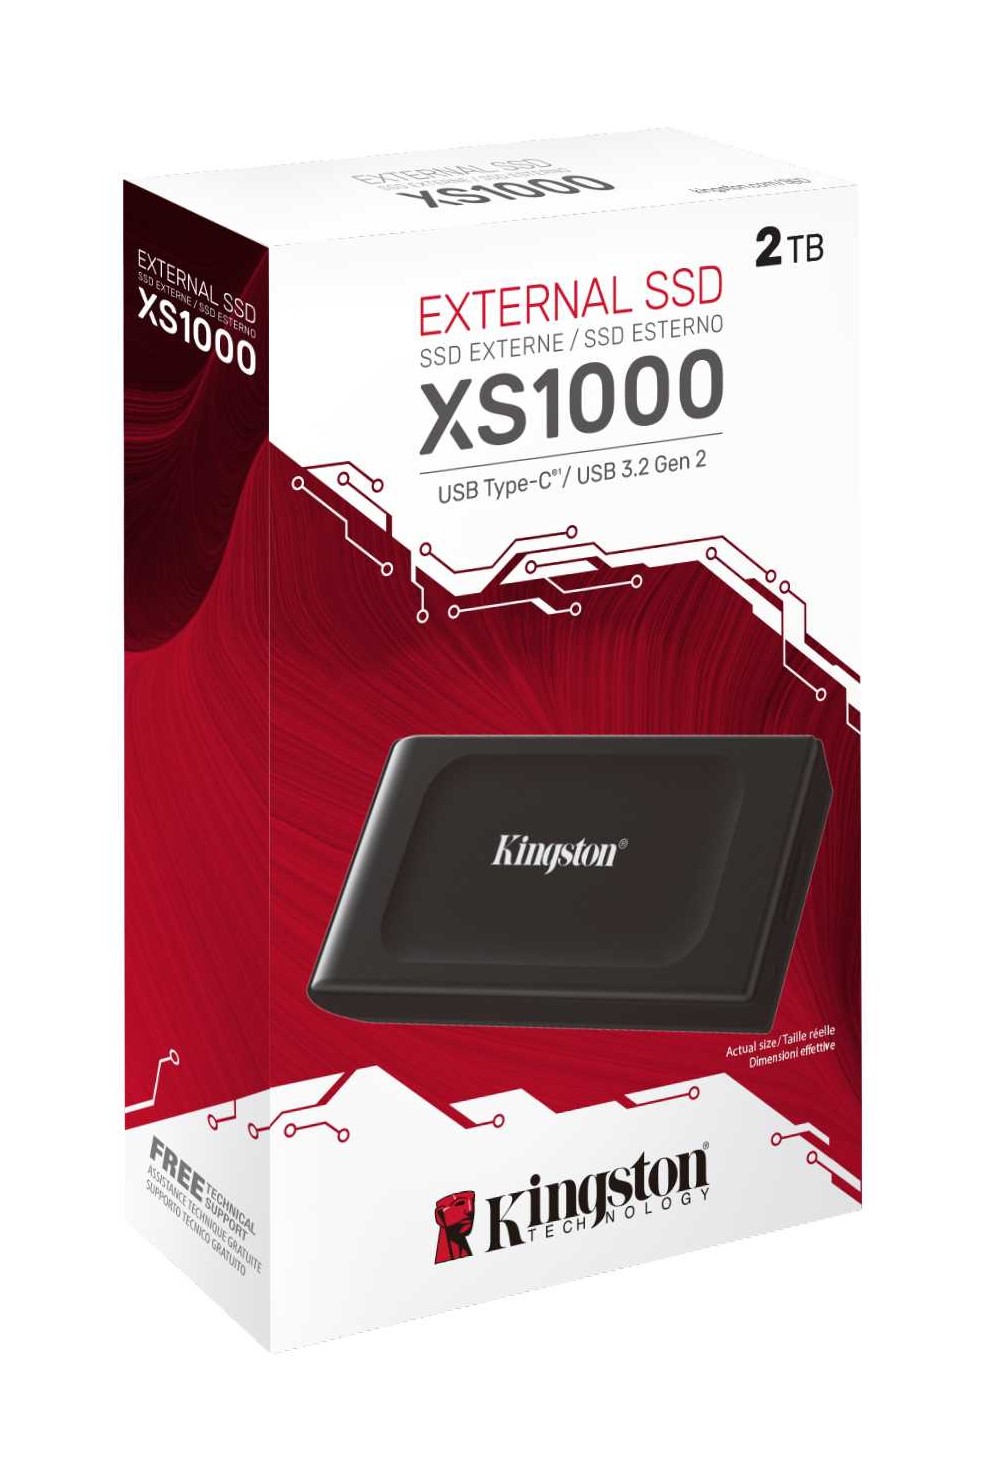 Kingston - SSD Externo Kingston XS1000 2TB USB3.2 Gen2 Preto (1050/1000MB/s)